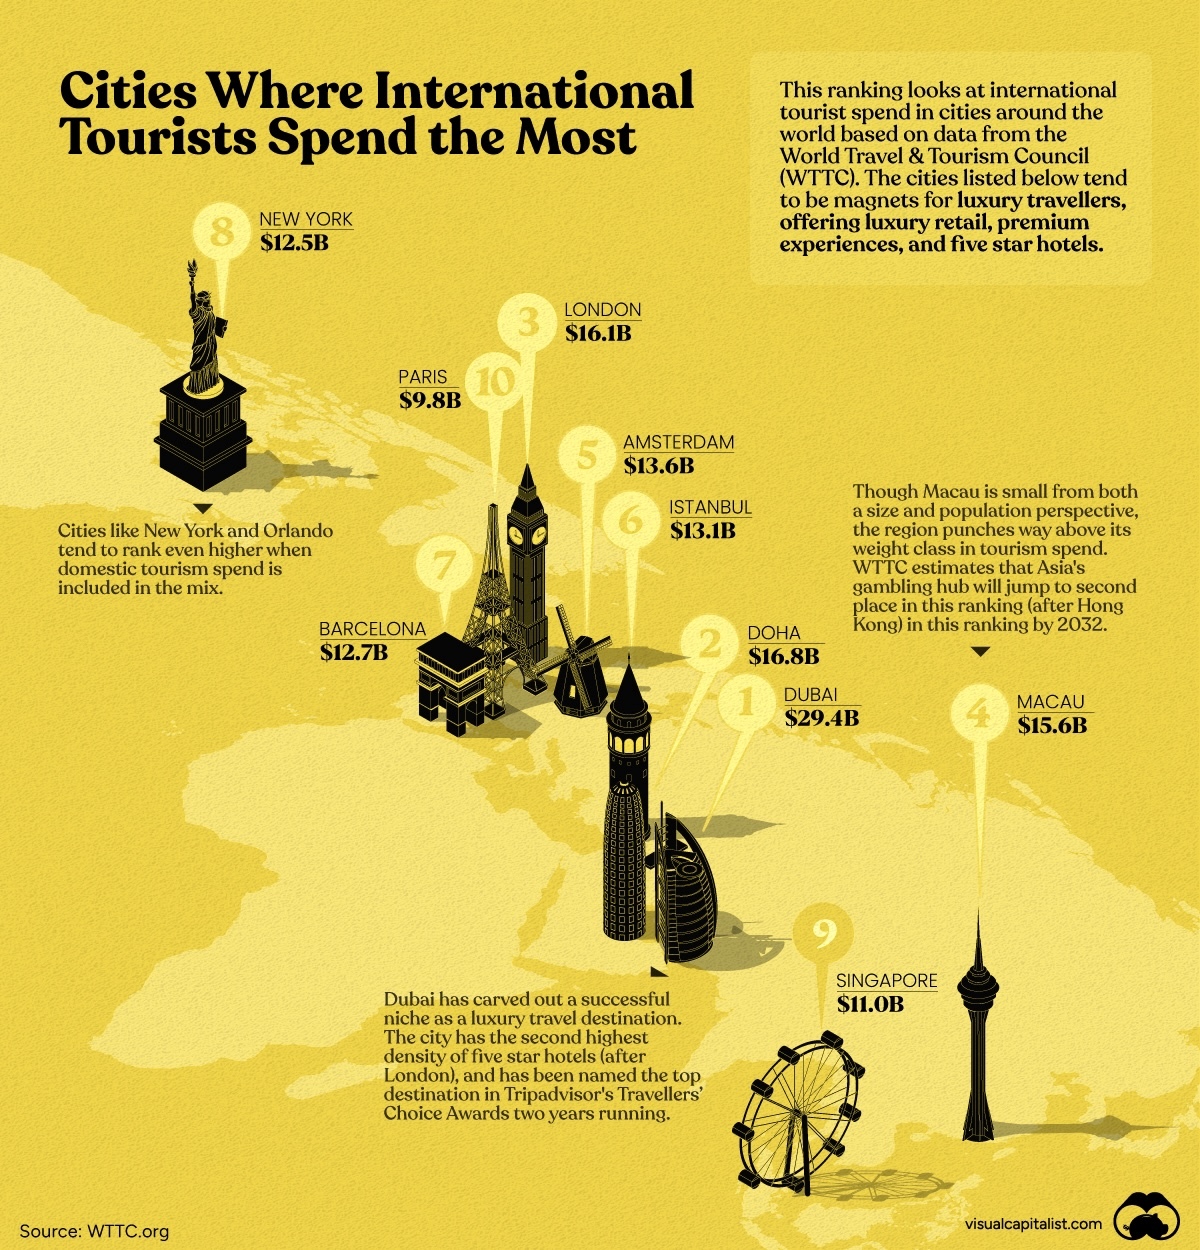 Top Cities for International Travelers Spending